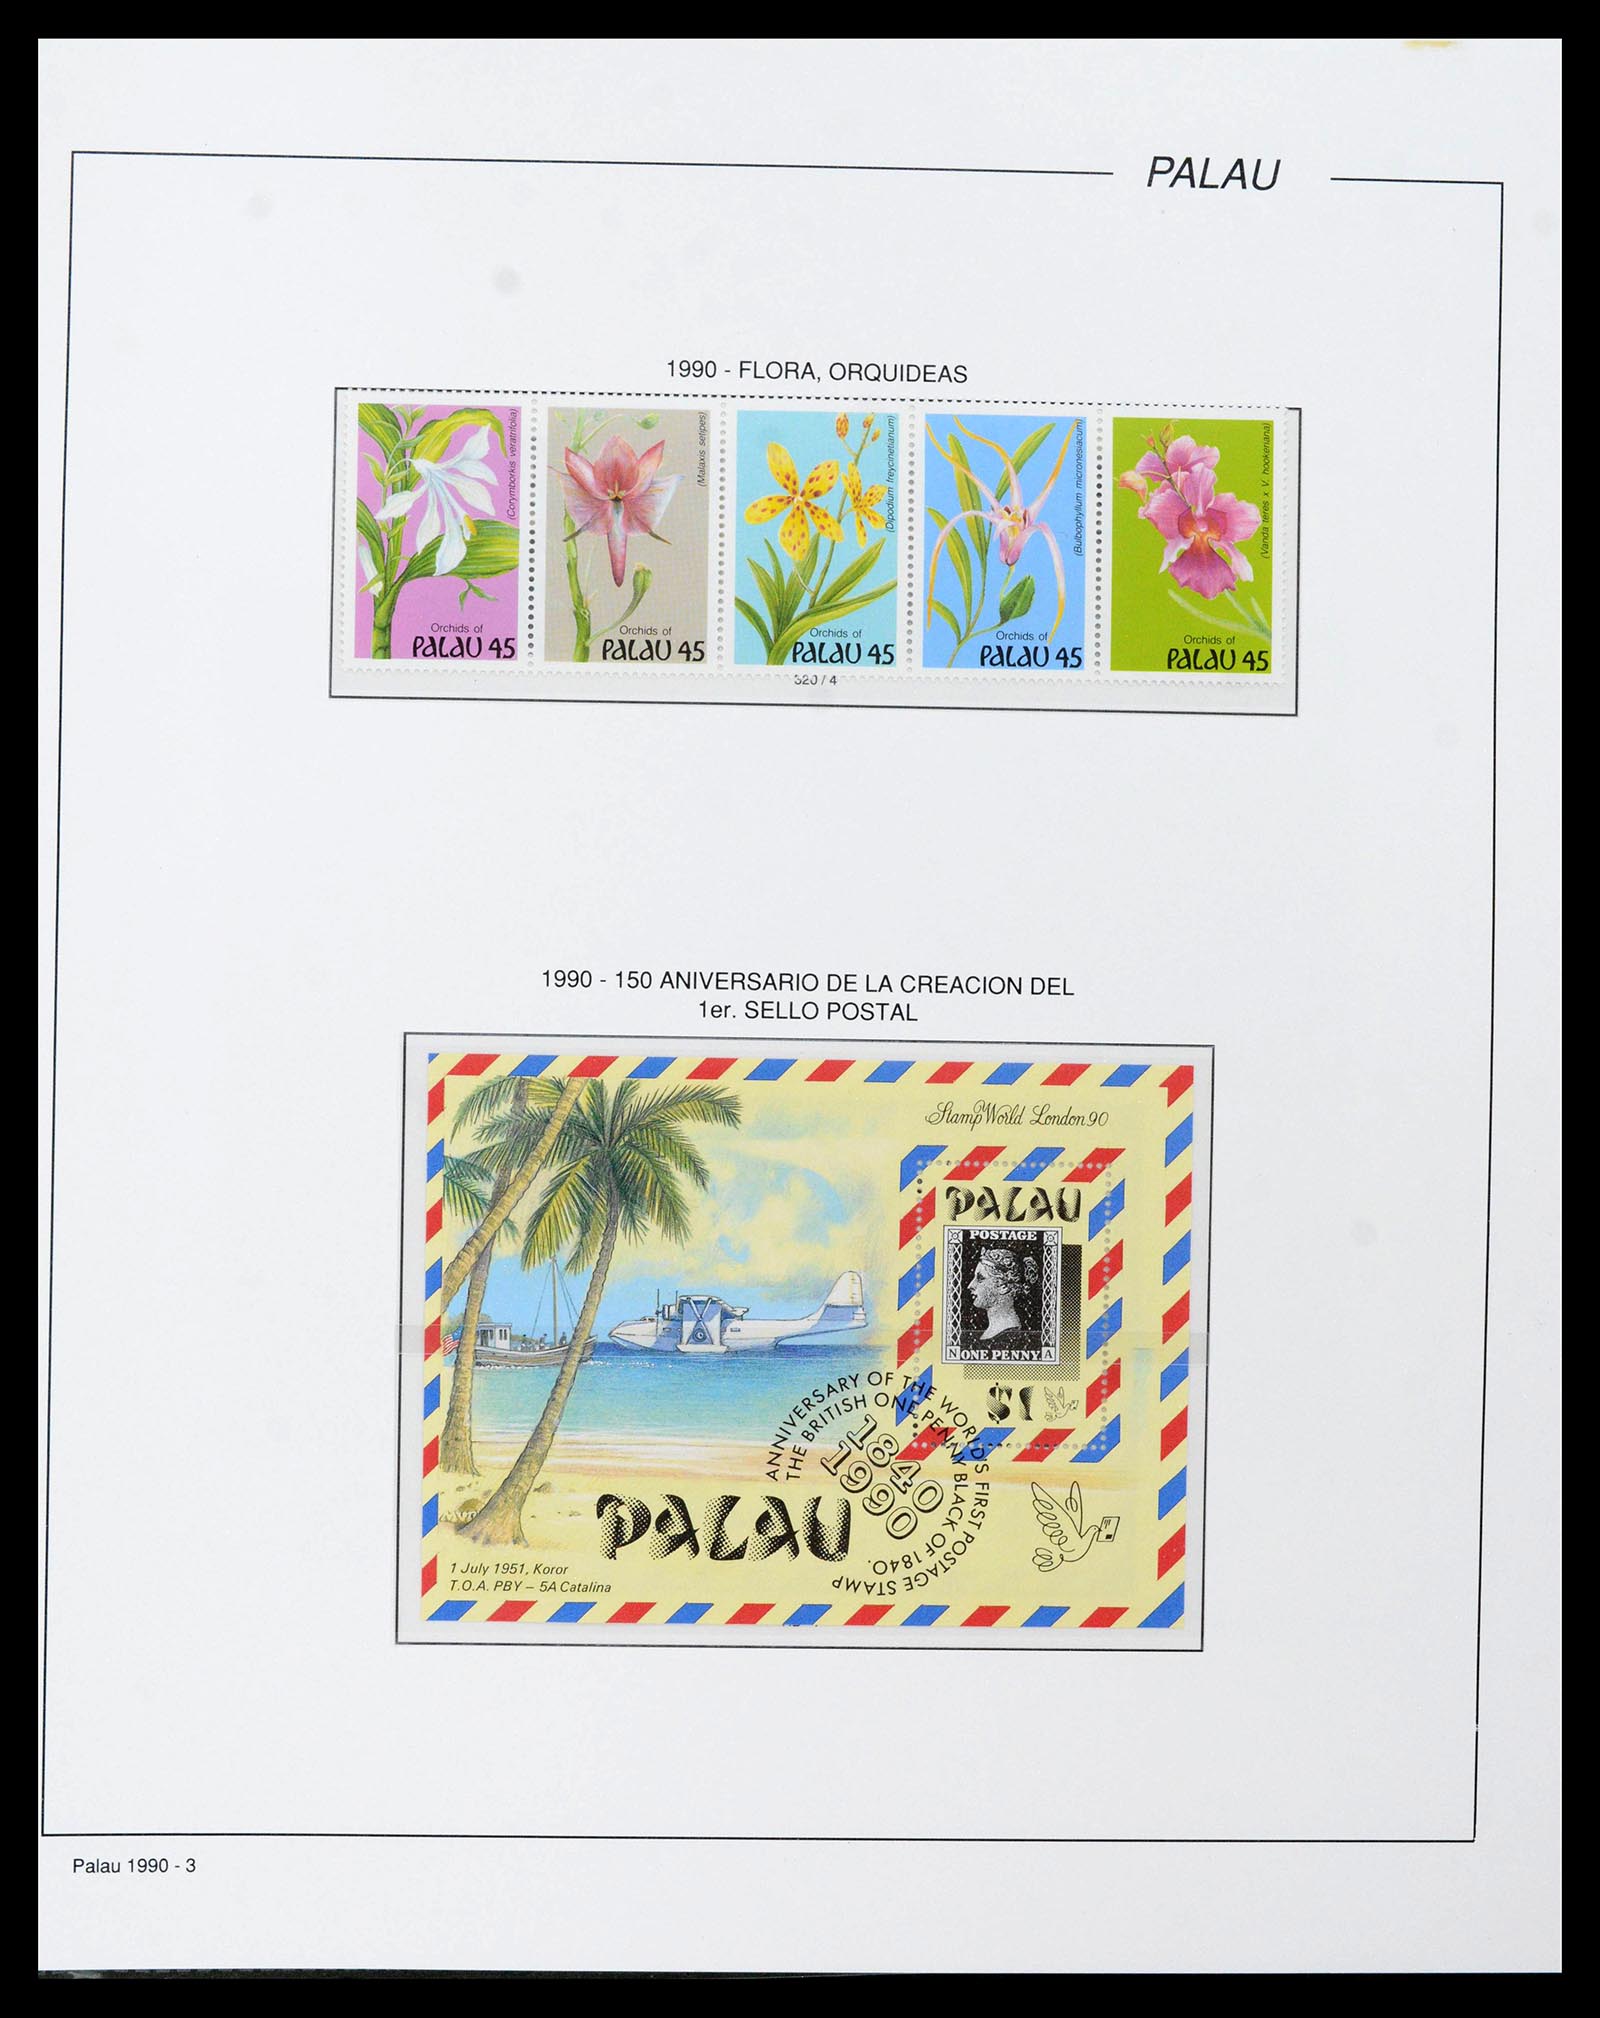 39222 0035 - Stamp collection 39222 Palau, Micronesia and Marshall islands 1980-1995.